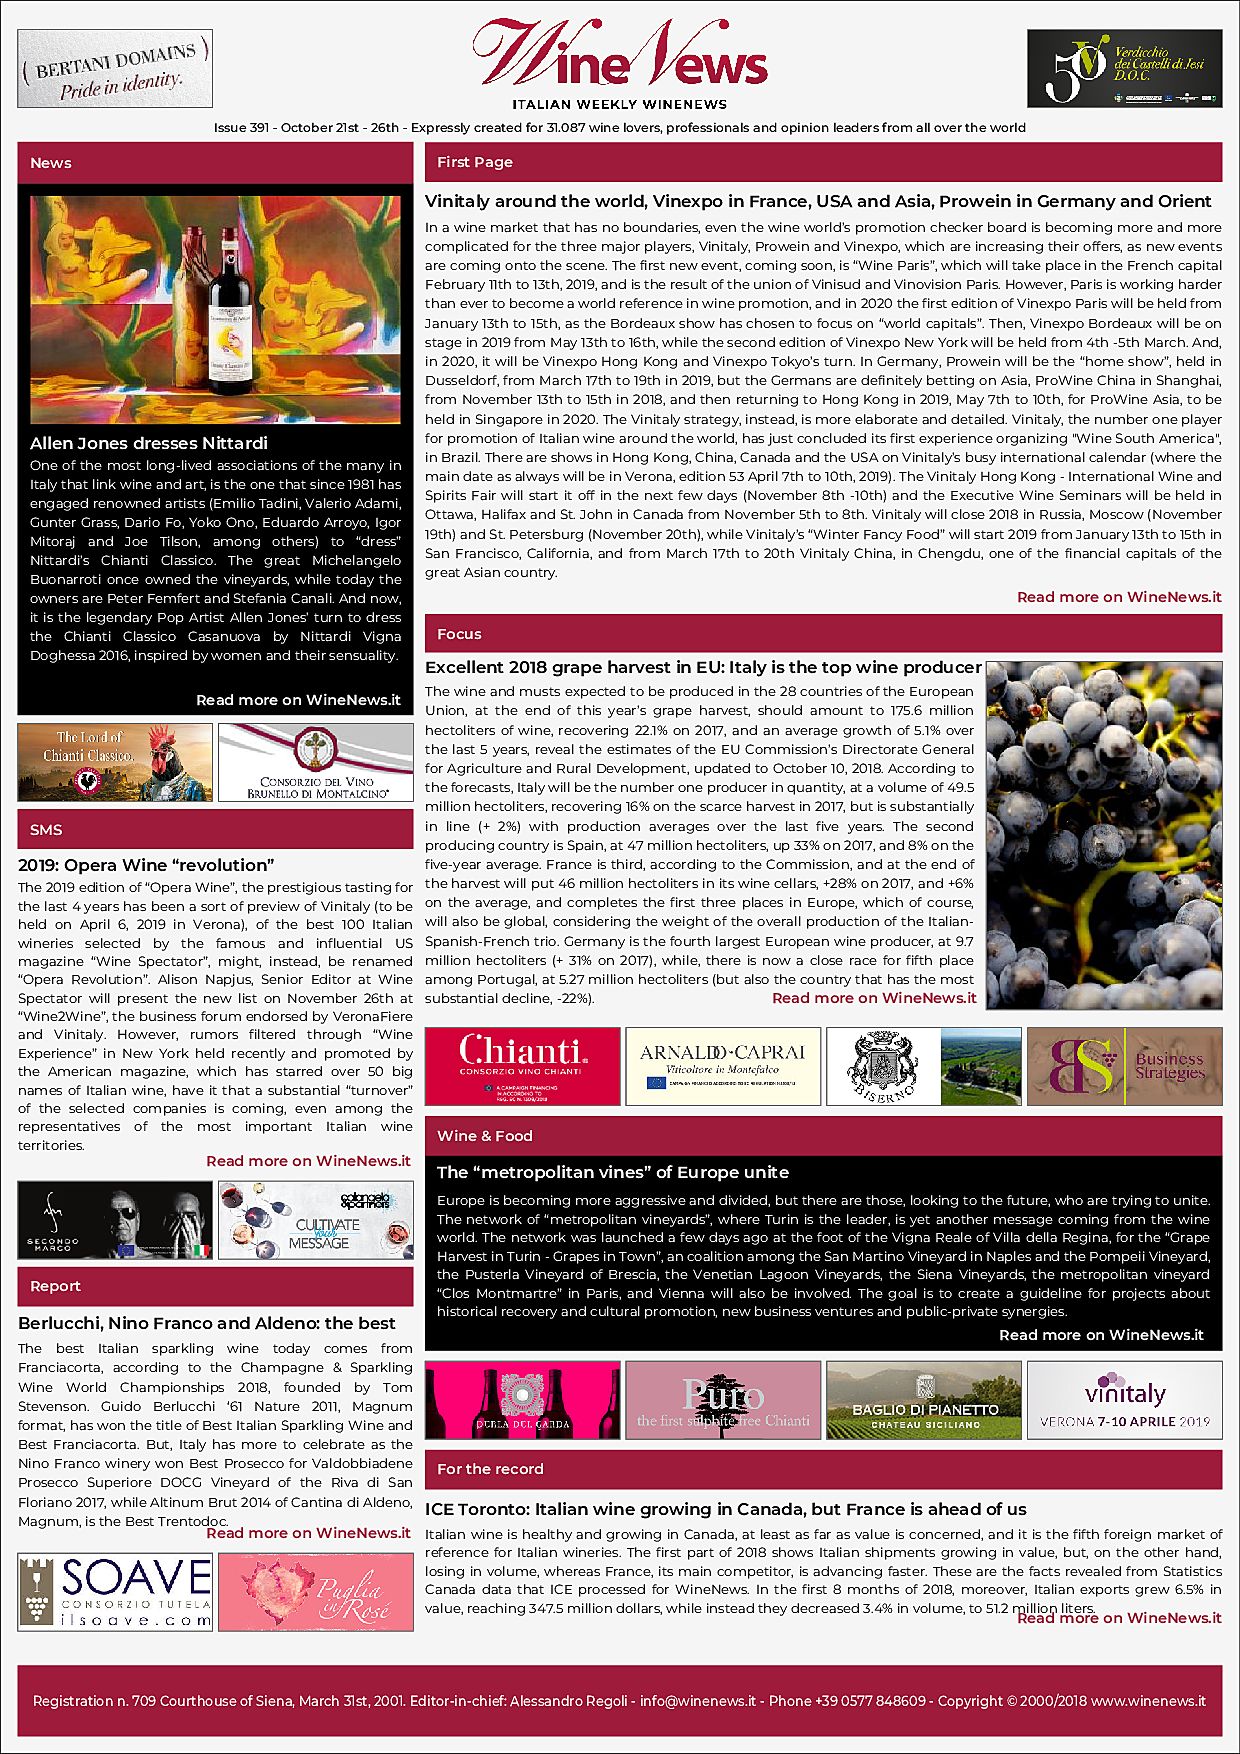 Italian Weekly WineNews